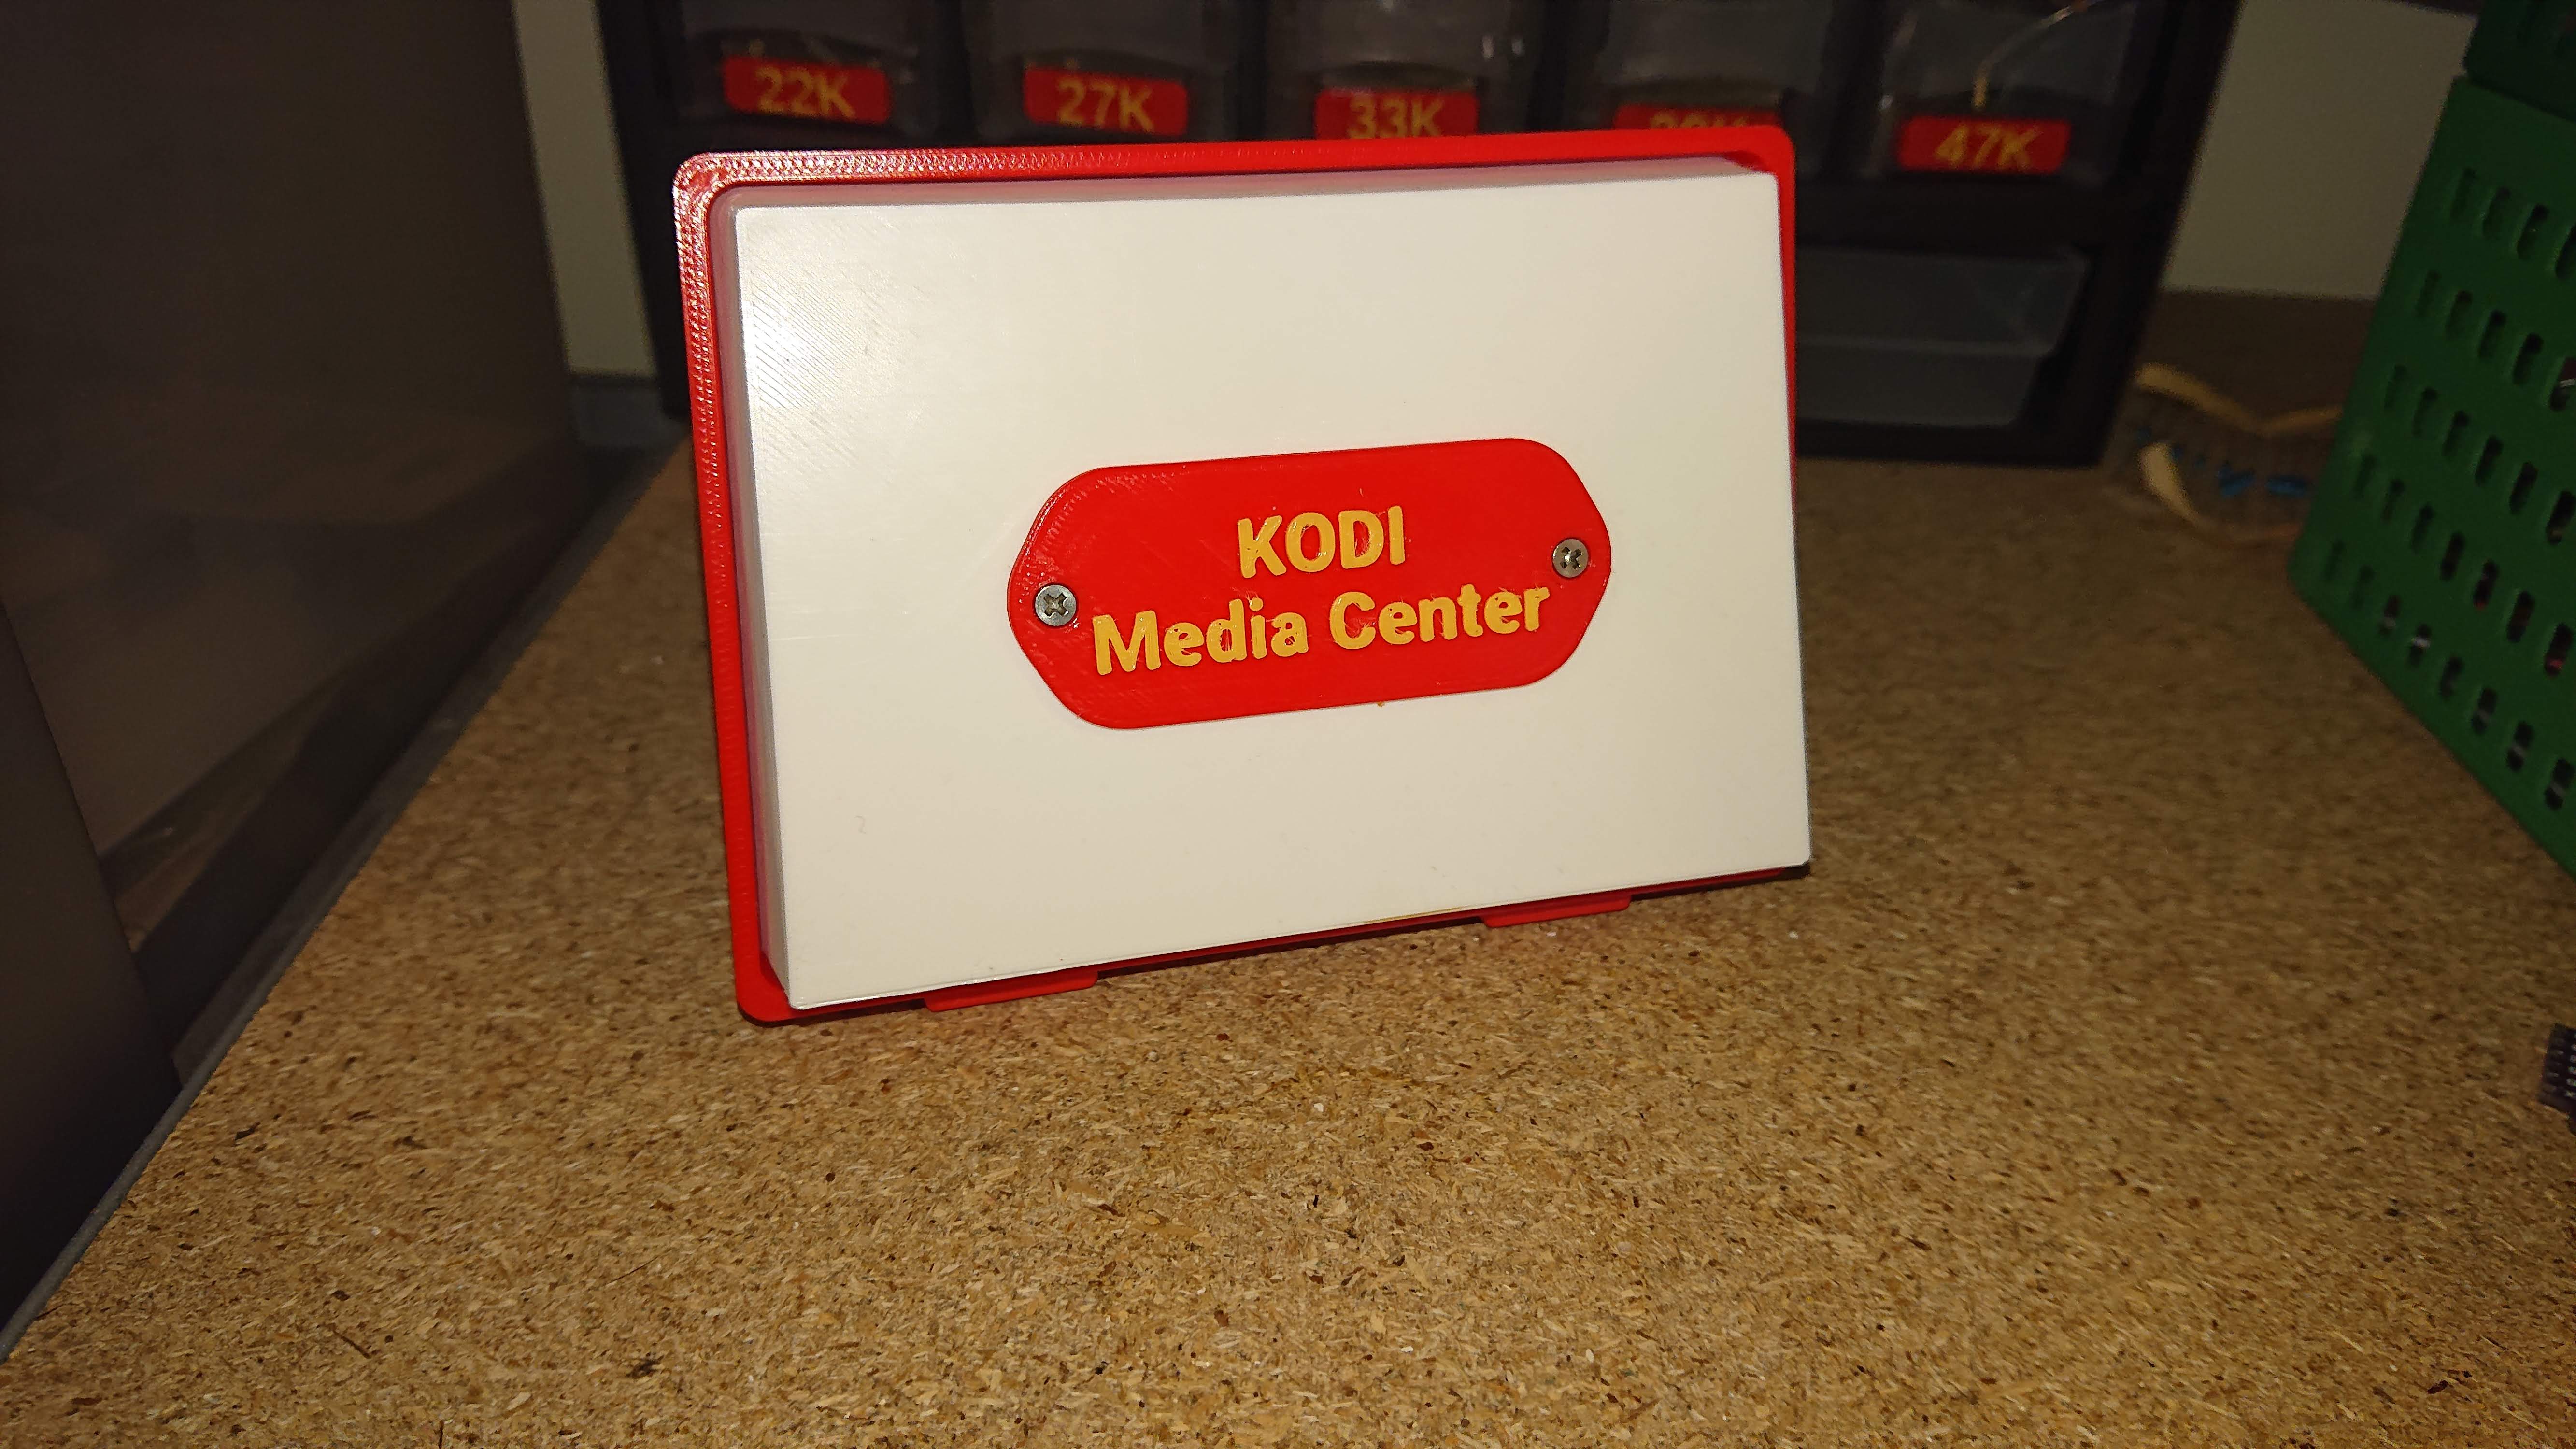 Case for Kodi media center